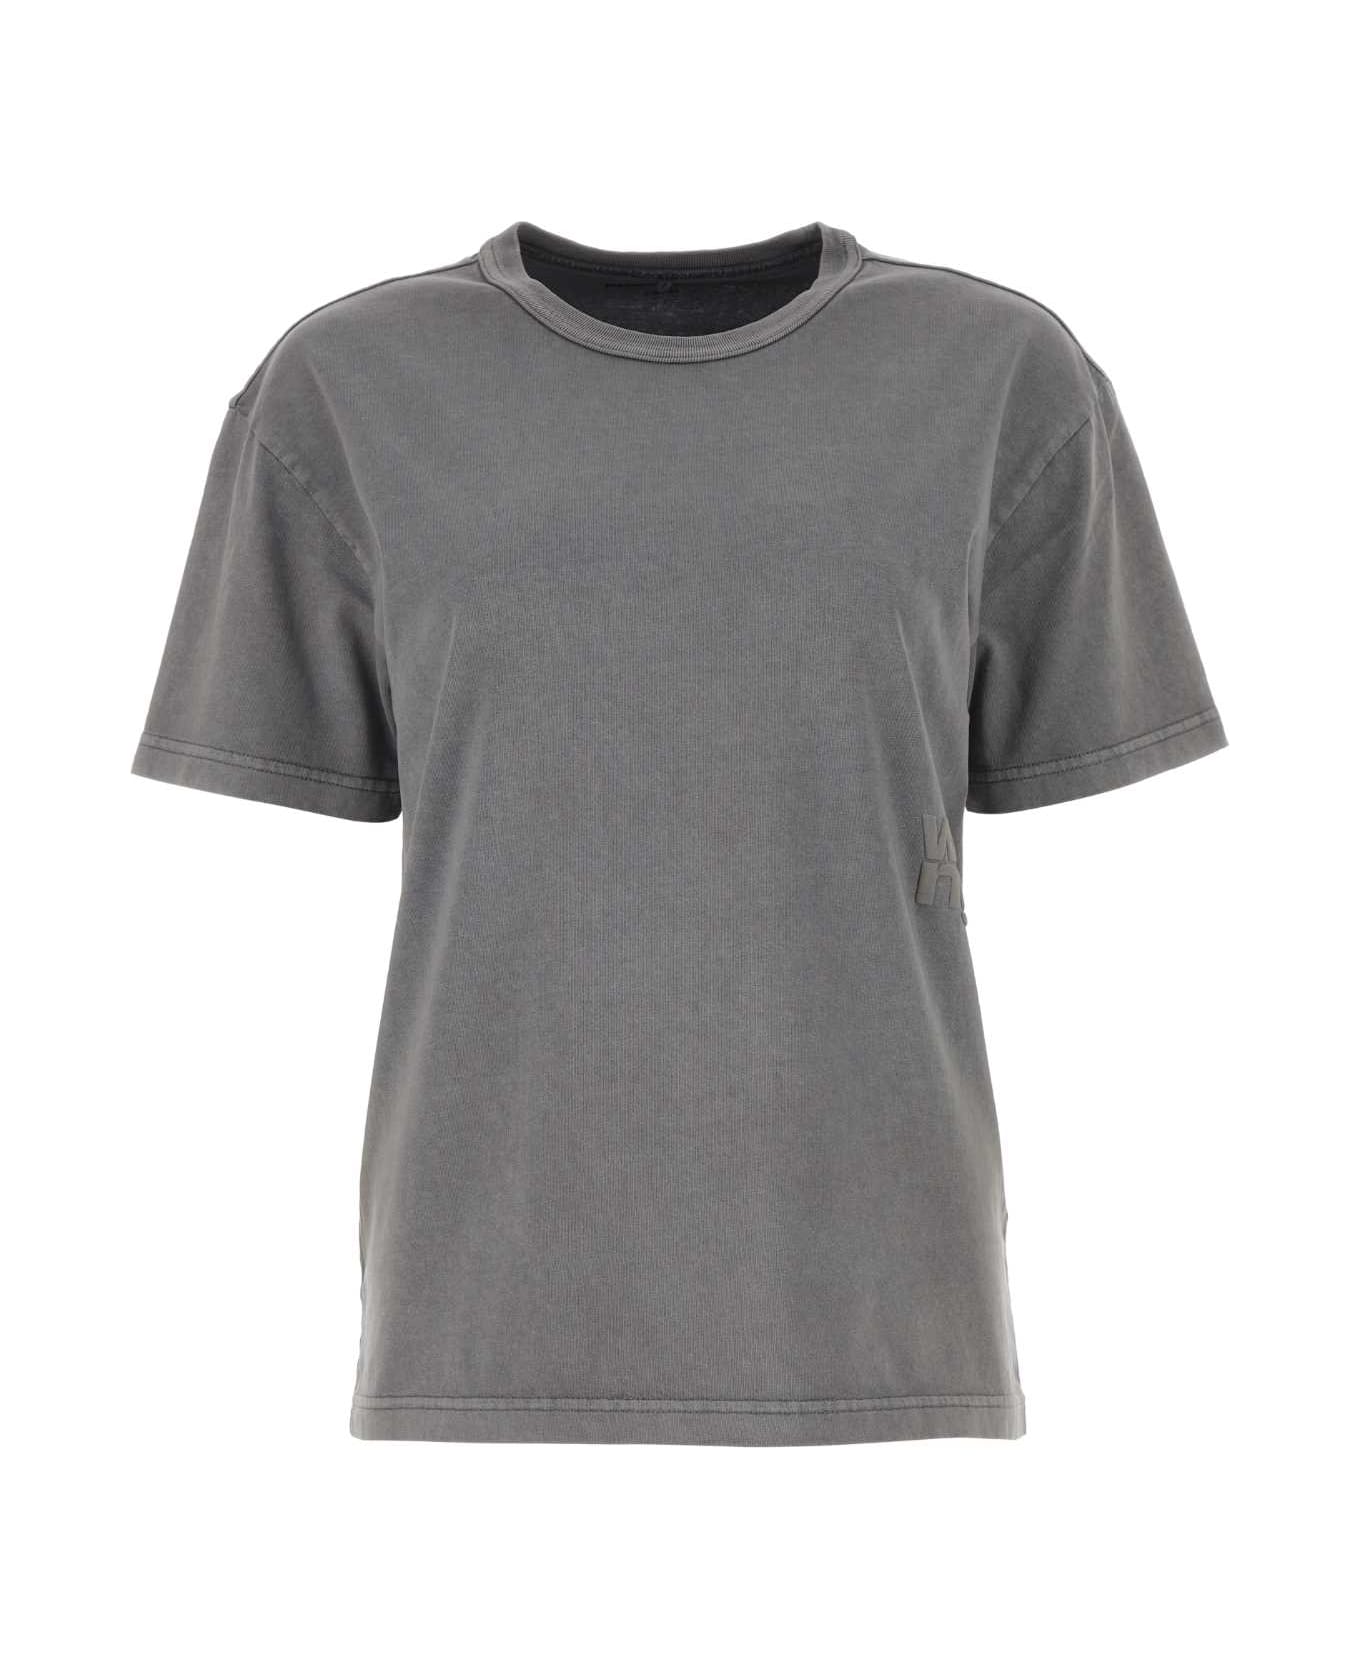 T by Alexander Wang Grey Cotton Oversize T-shirt - ACIDFOG Tシャツ